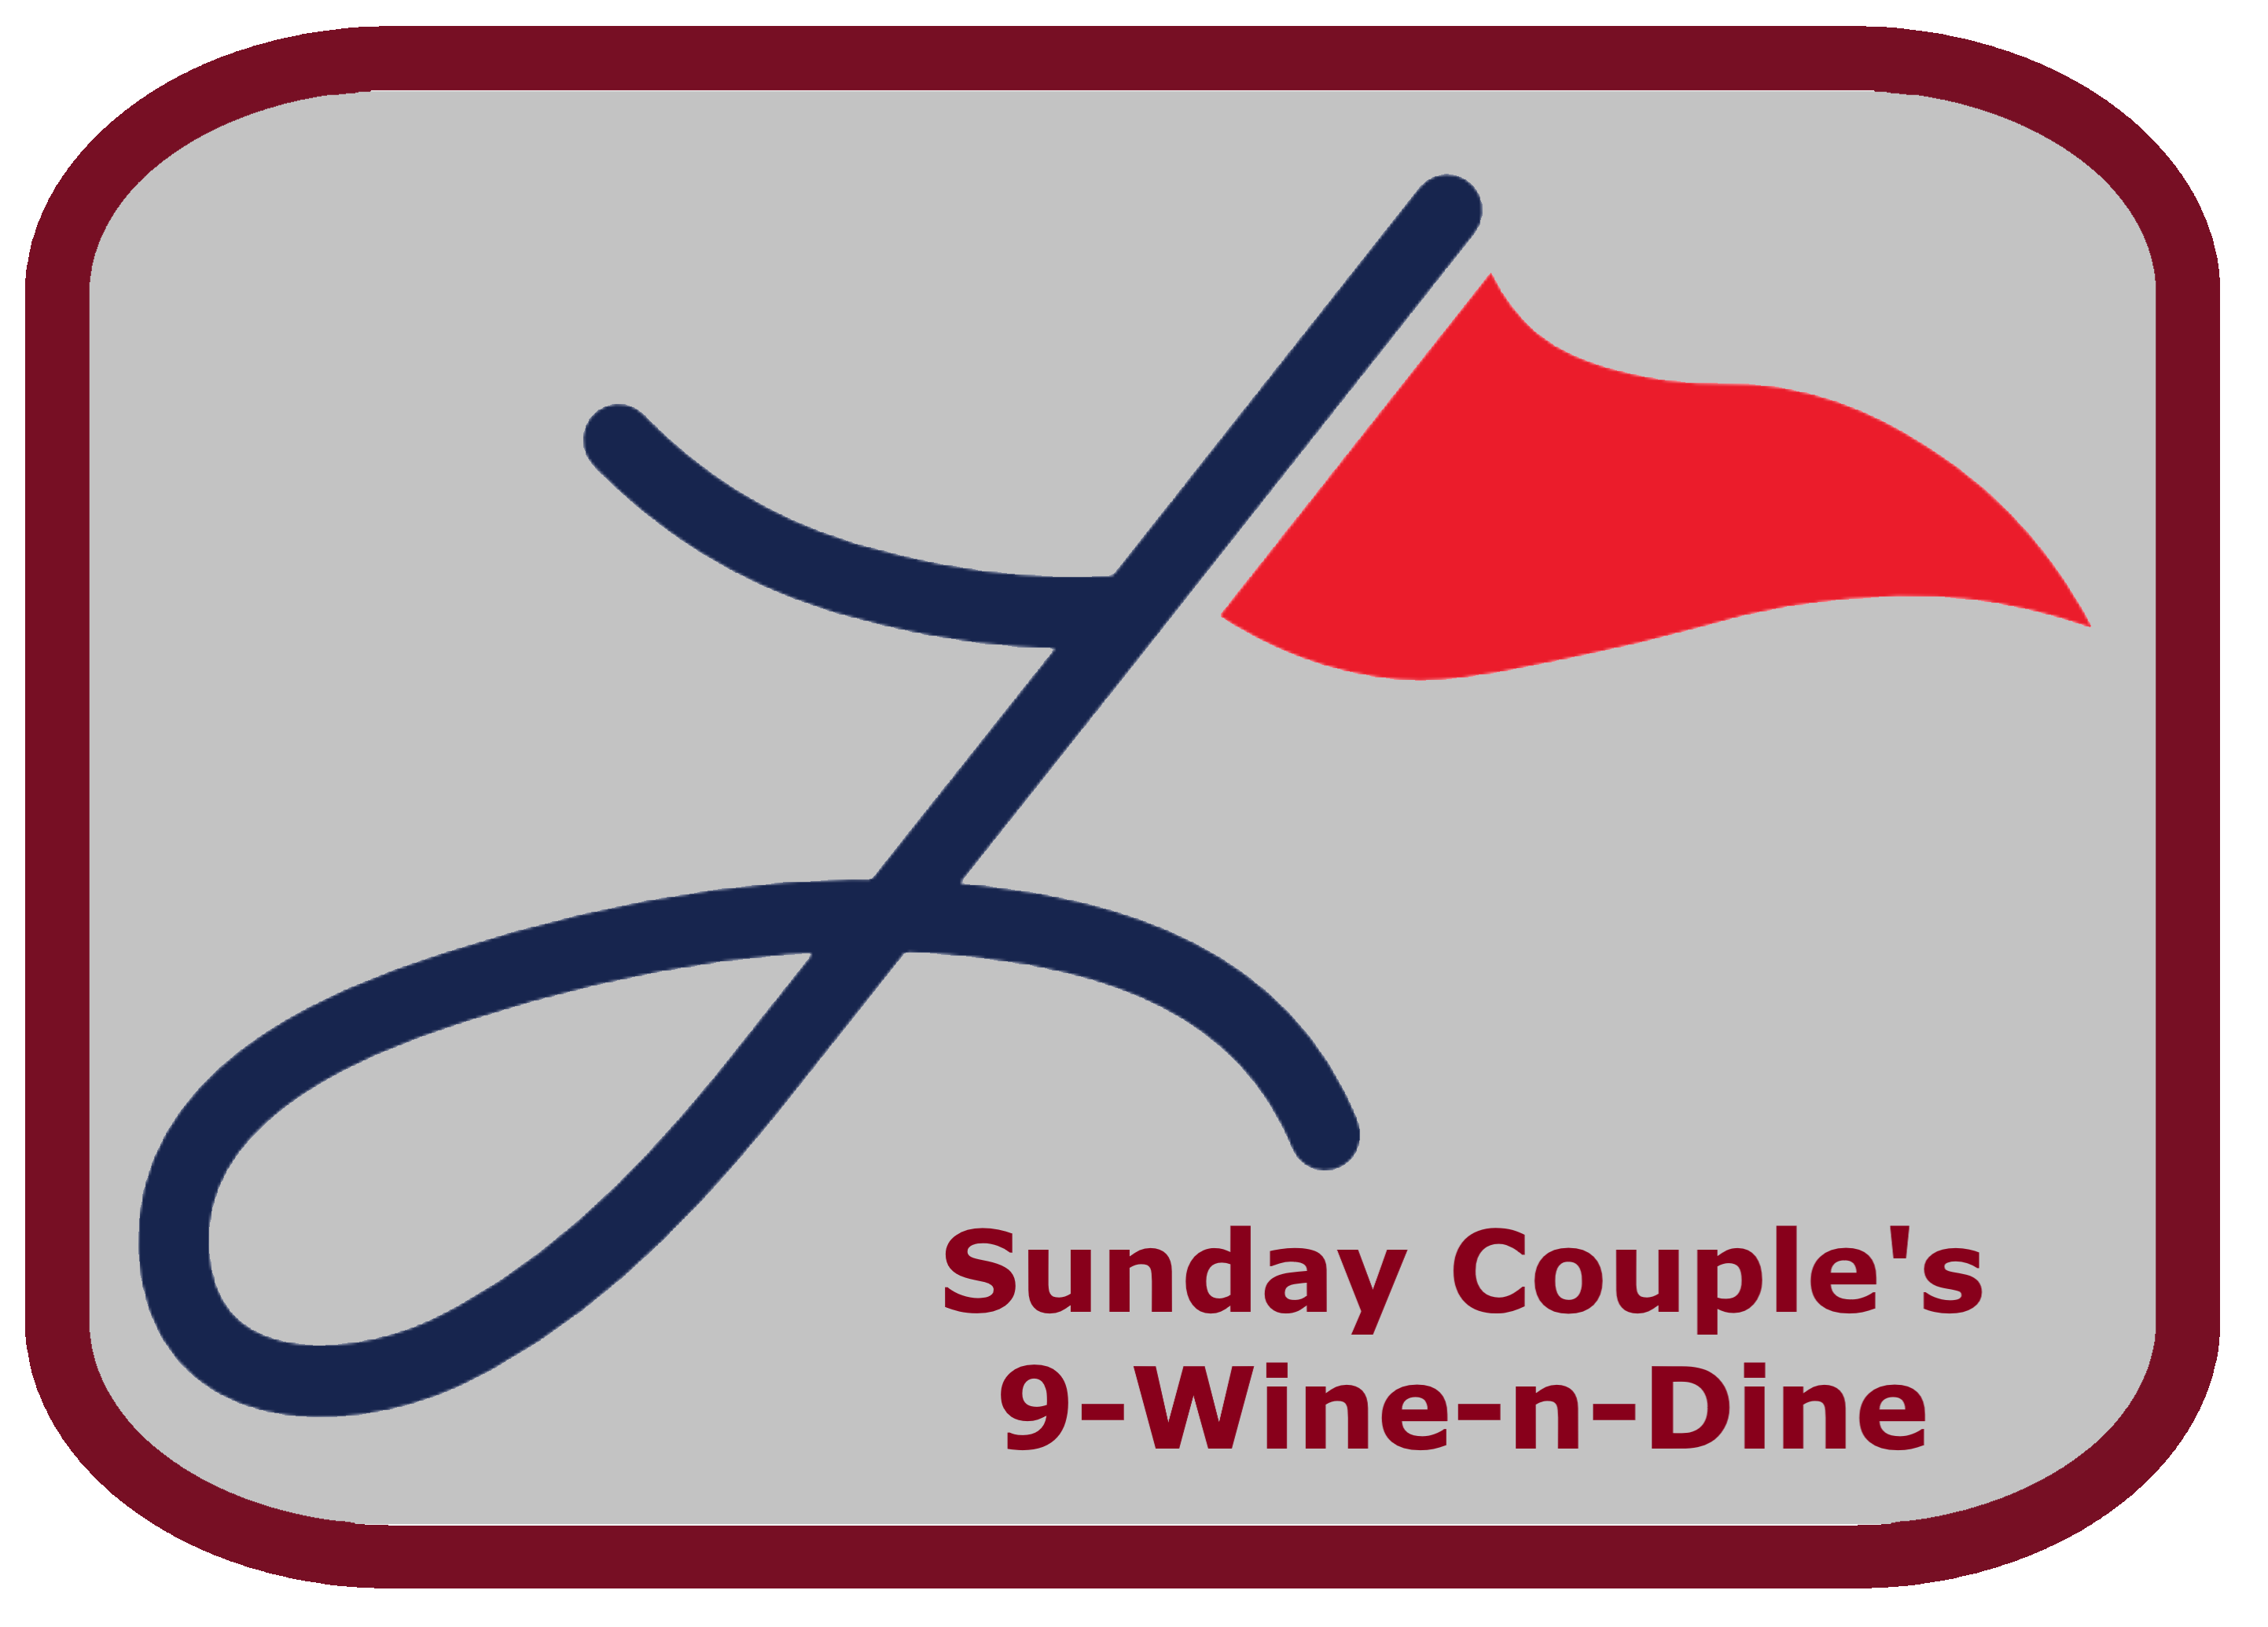 Couple's Sunday 9-Wine-n-Dine